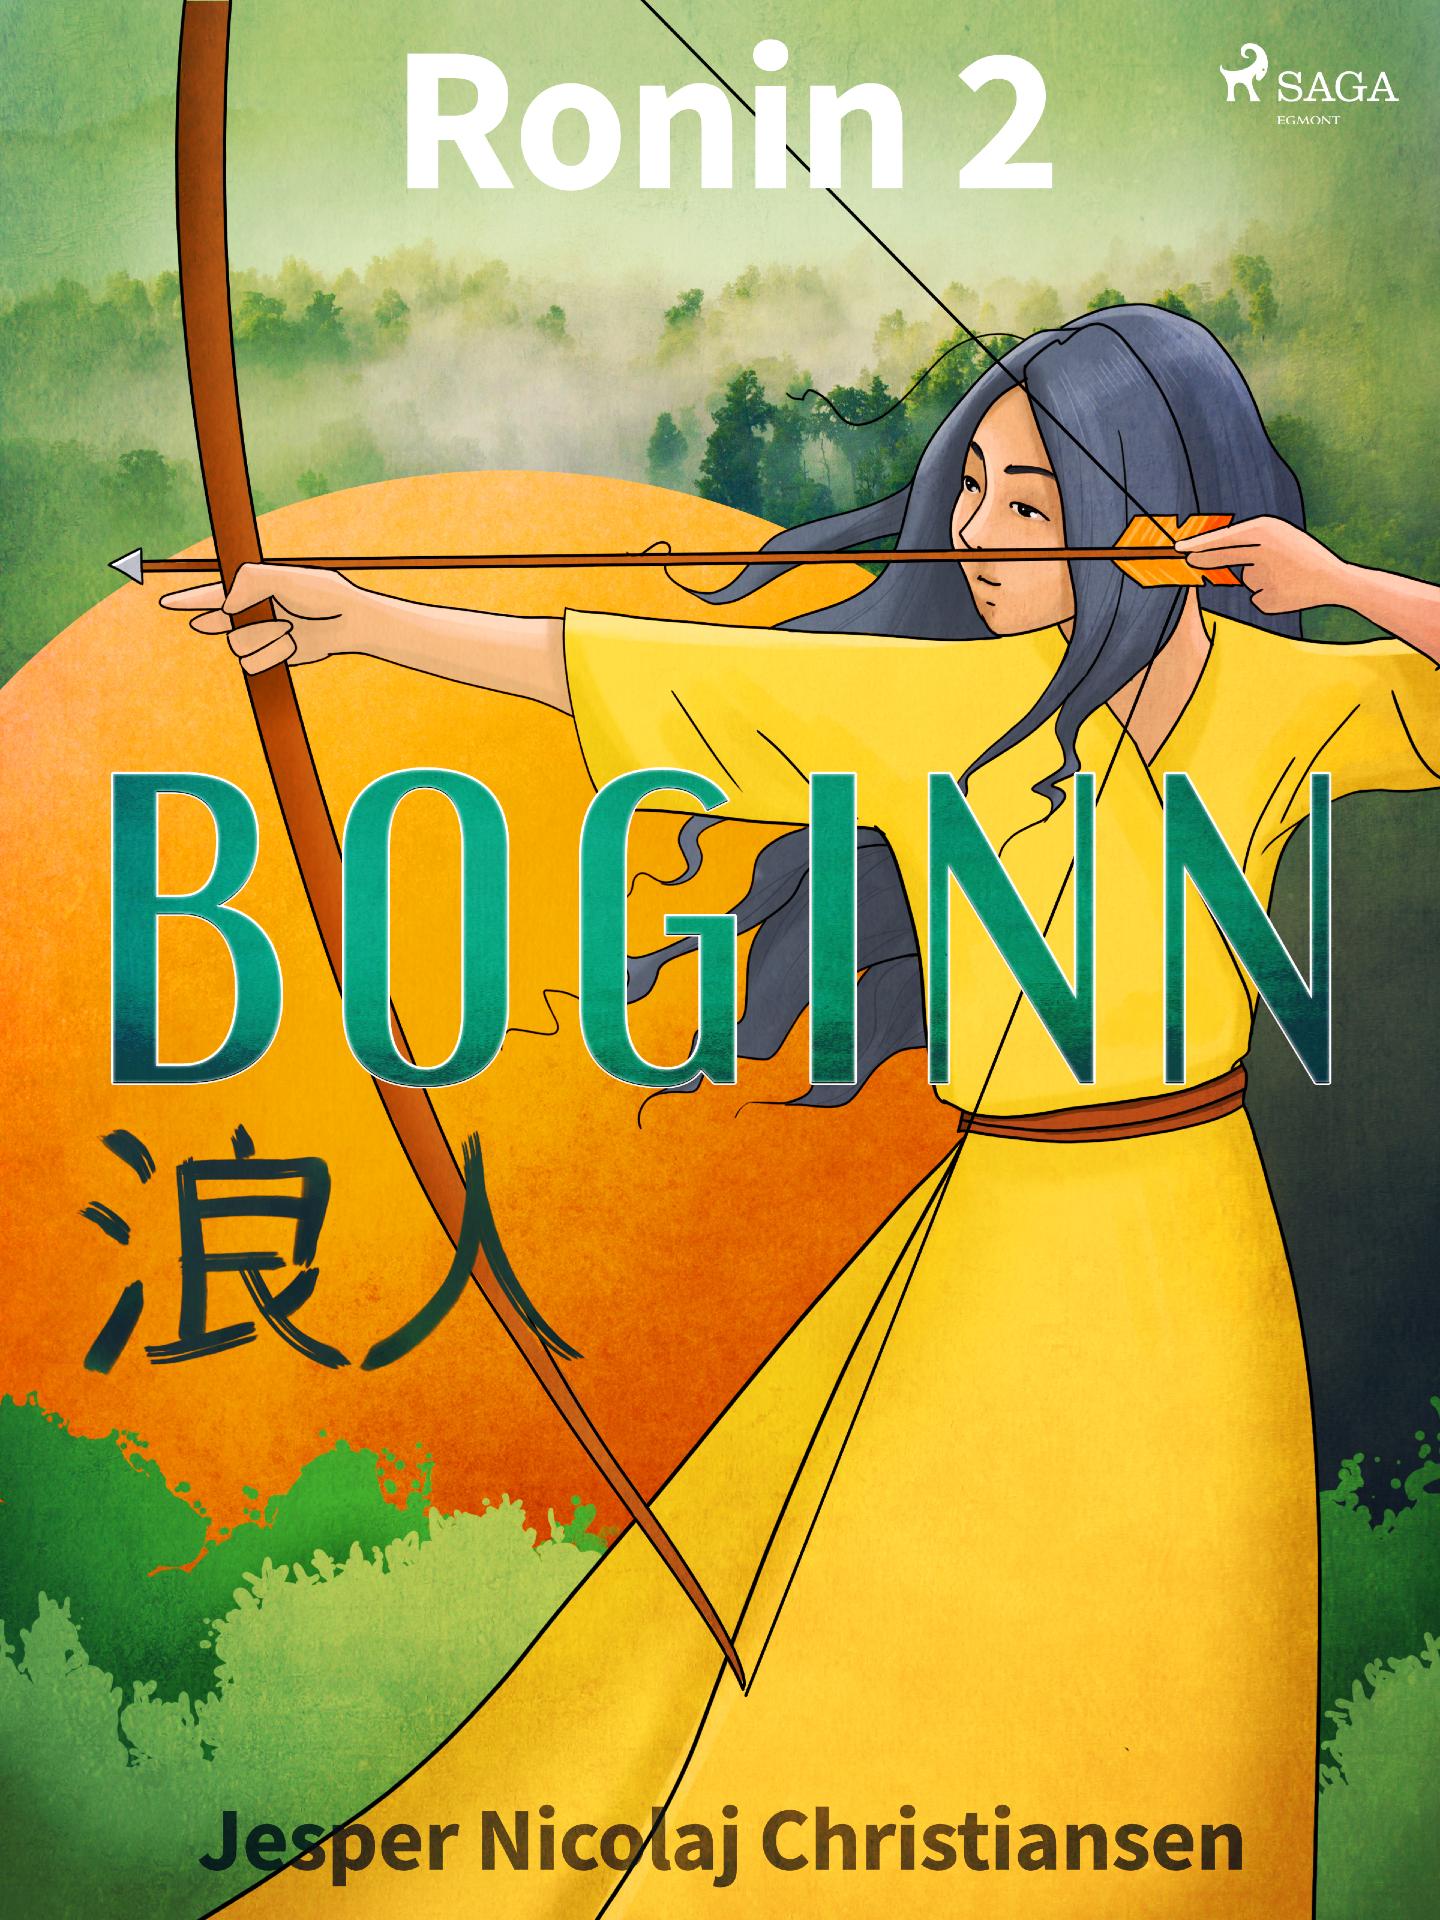 Ronin 2 - Boginn